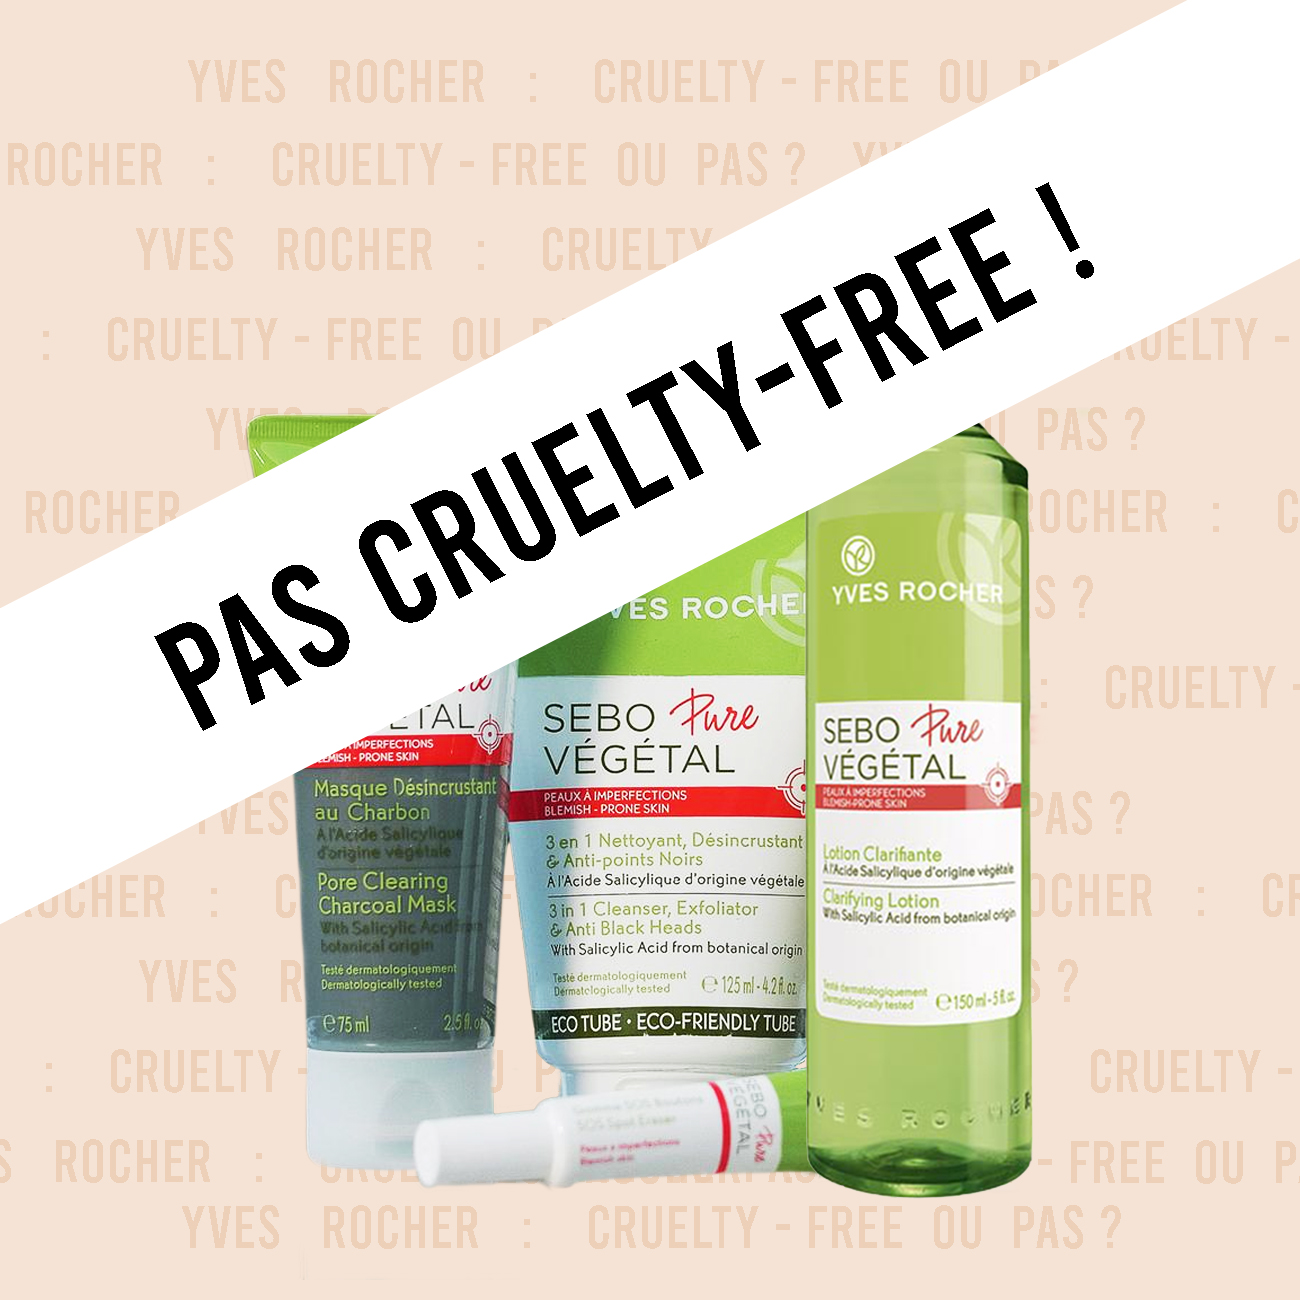 Yves Rocher, cruelty-free ou pas ?